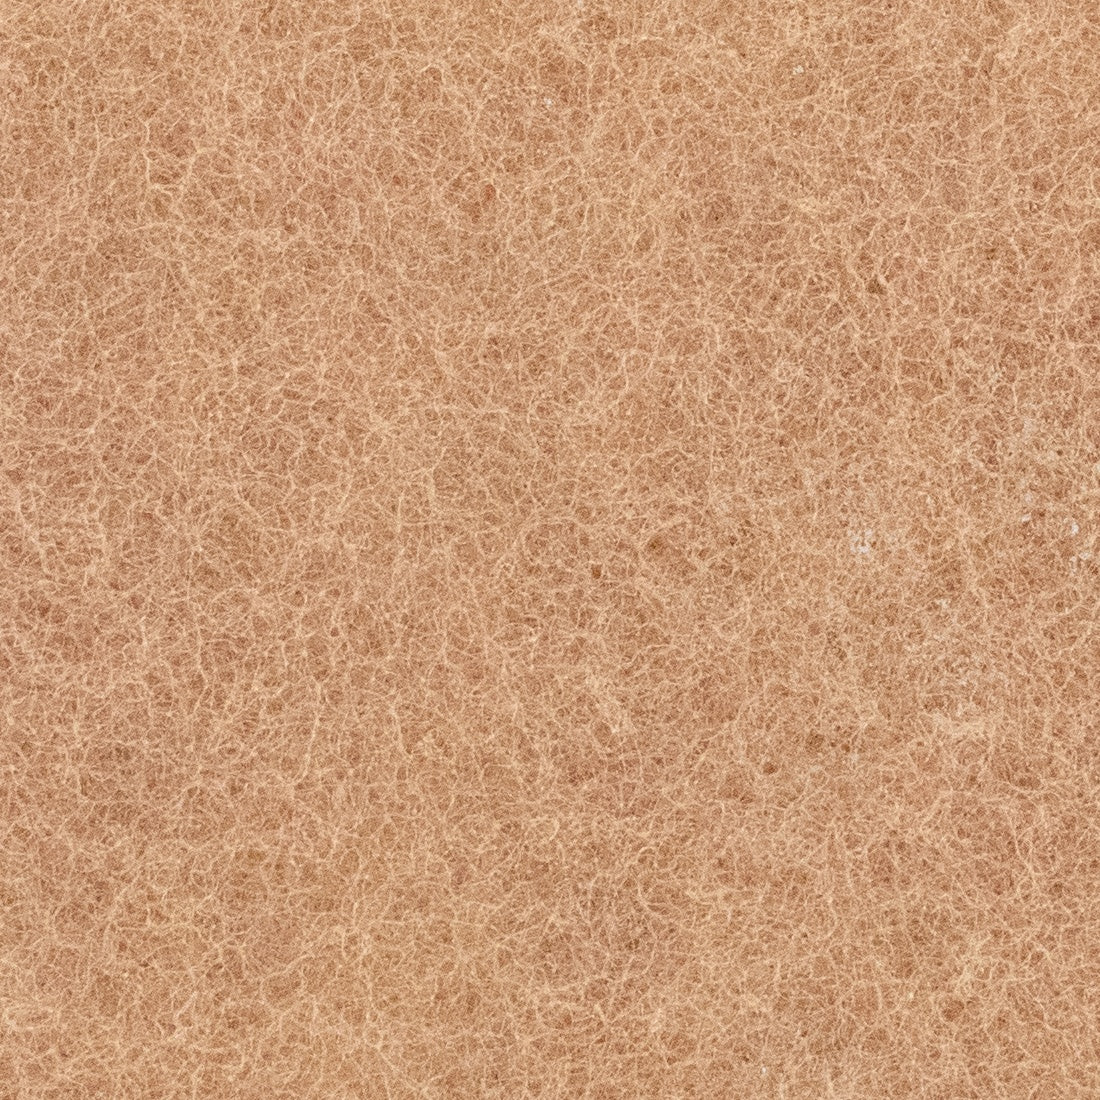 XERO Walnut Scrub Pad Close-up View